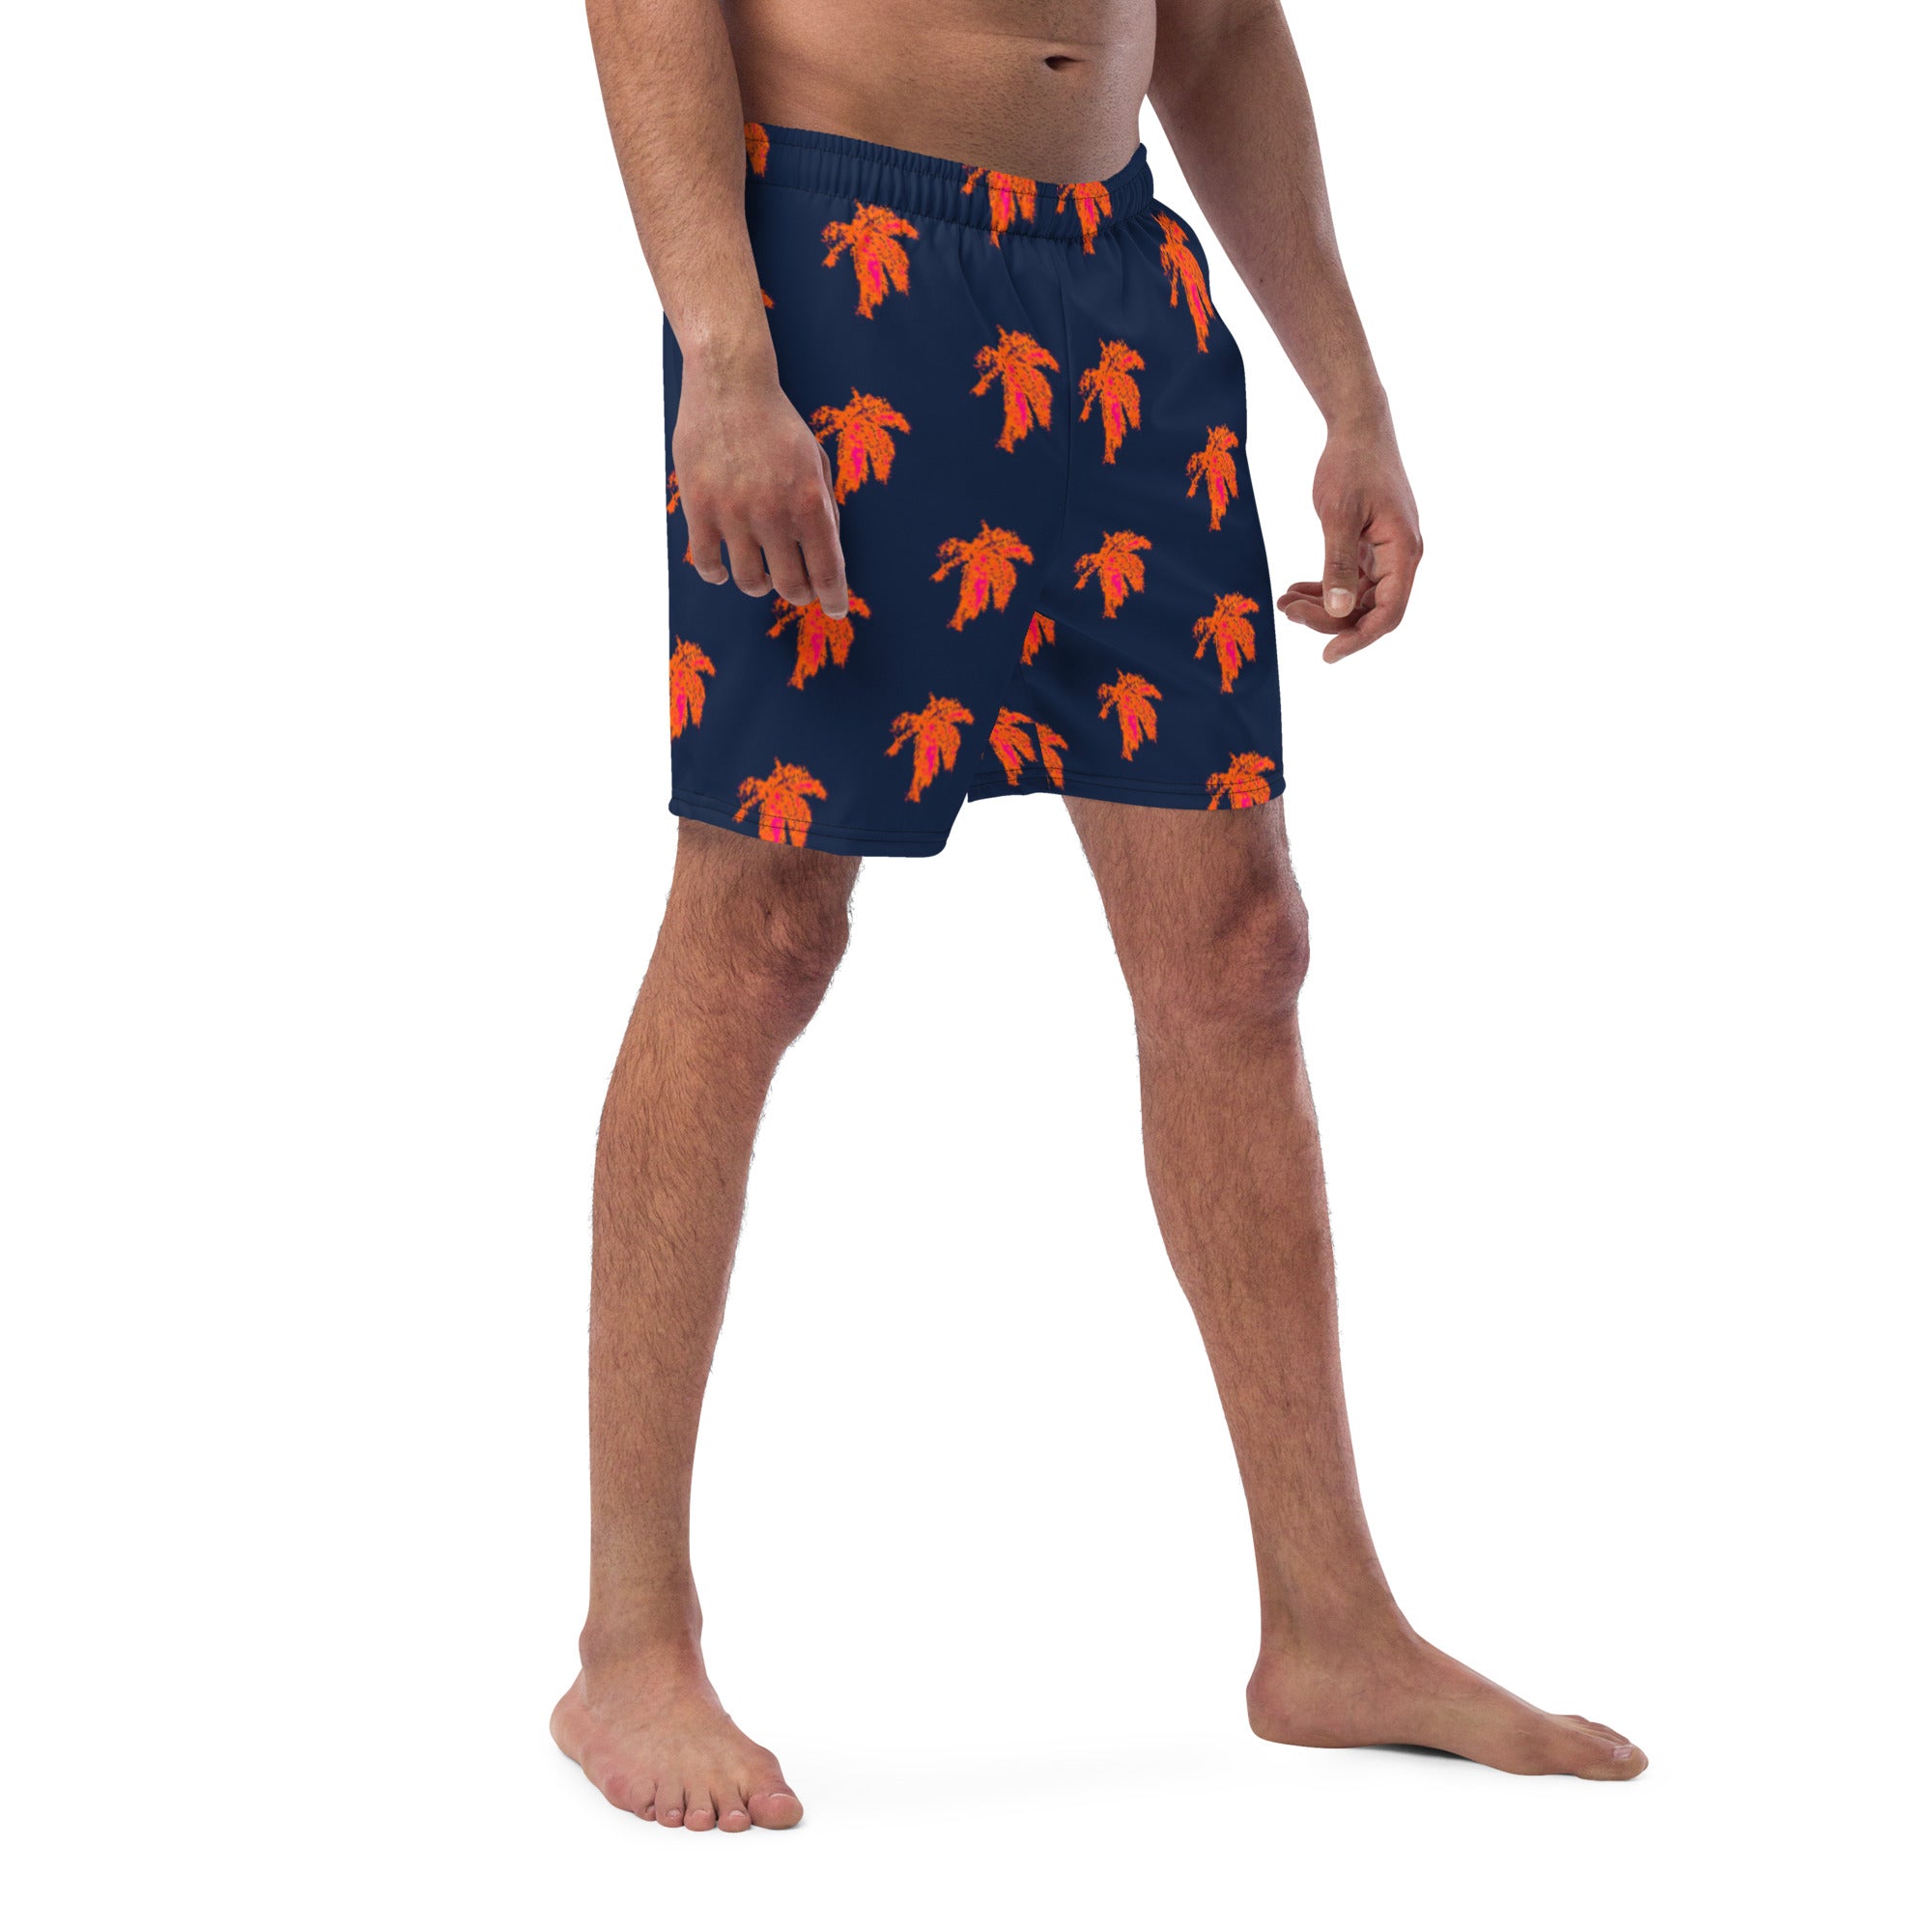 Neon Palm Men's swim trunks